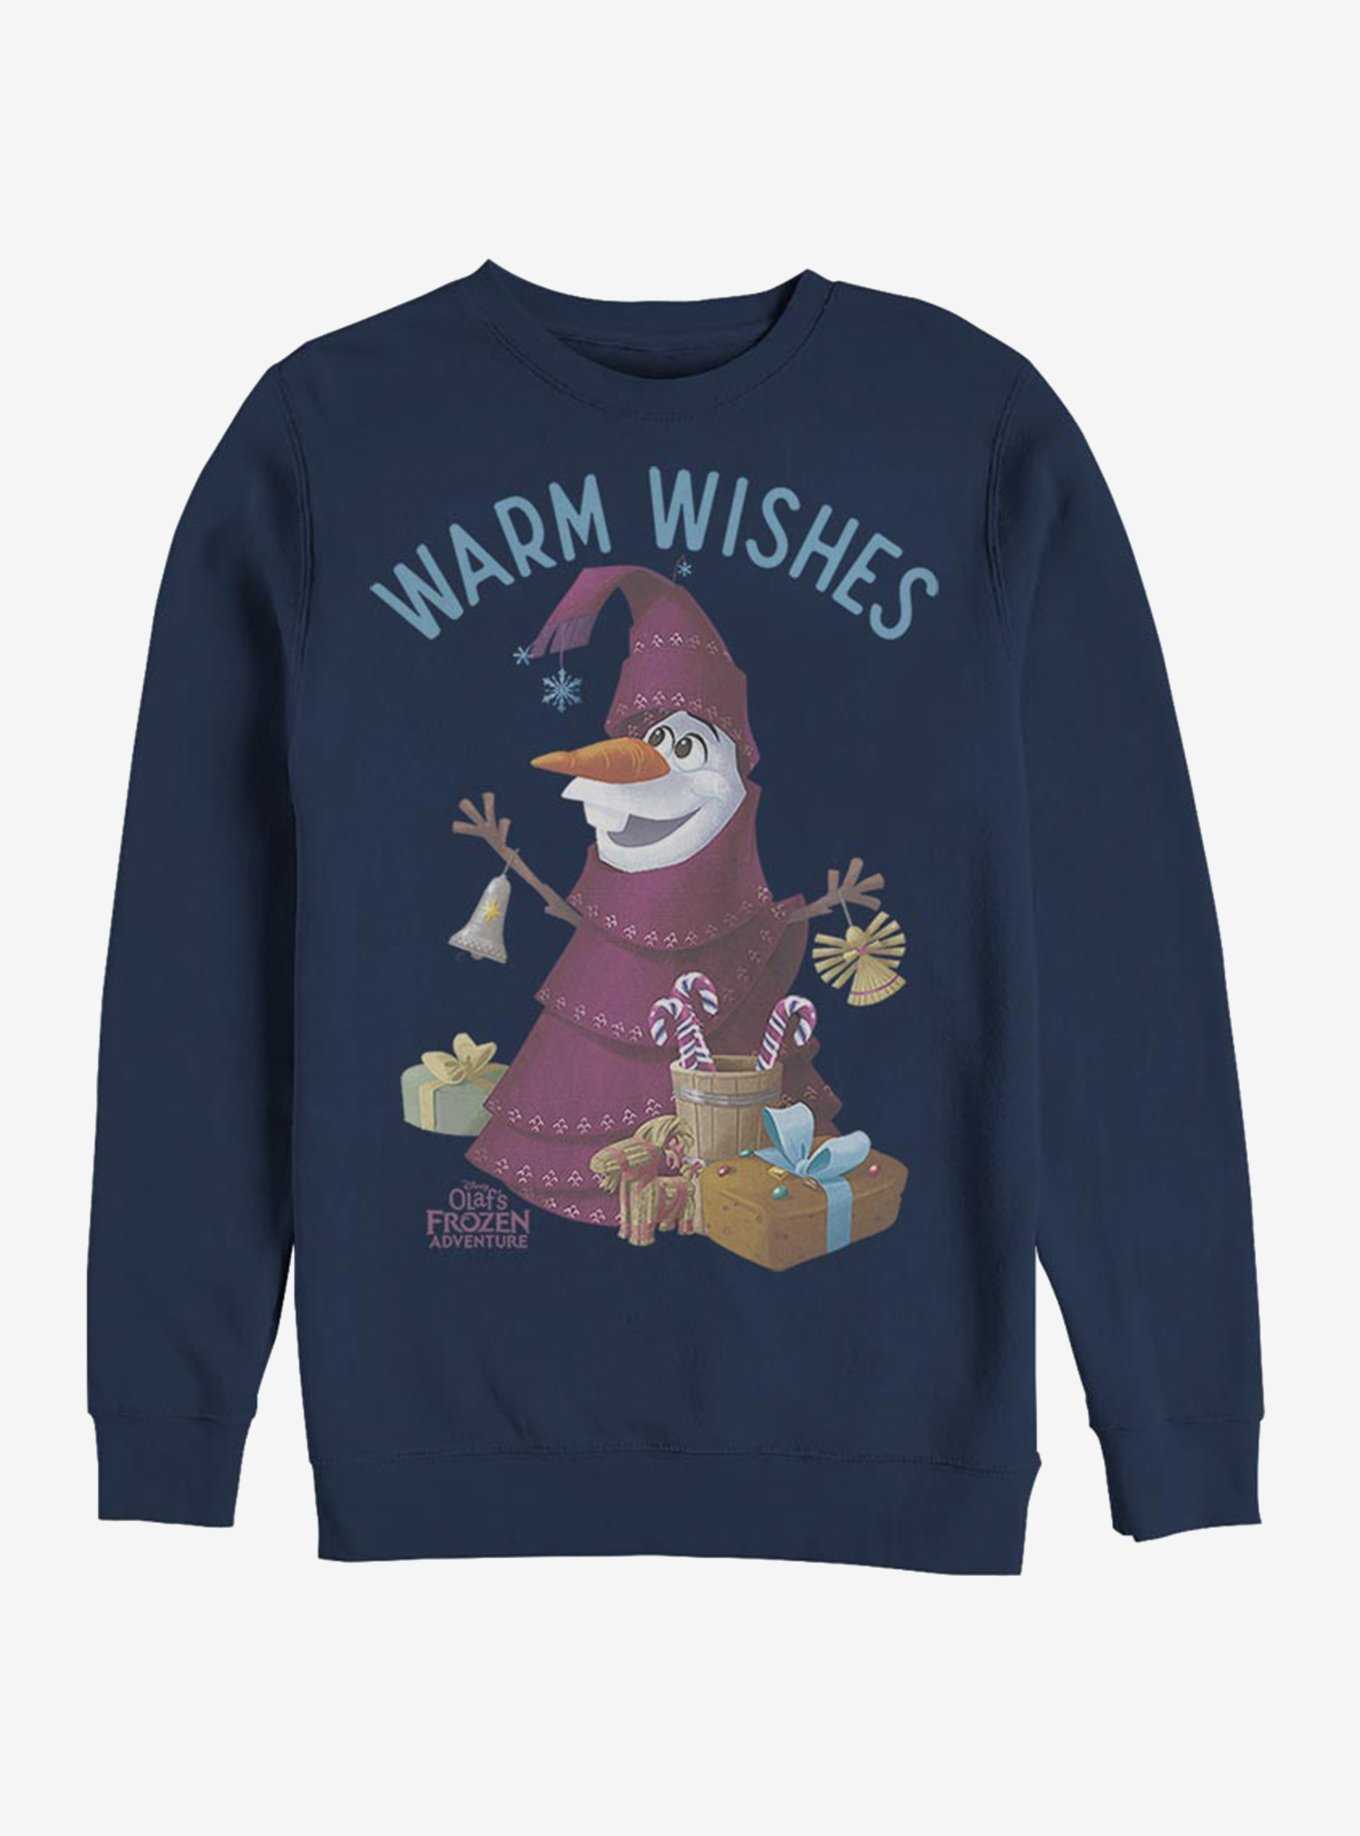 Disney Frozen Olaf Wishes Sweatshirt, , hi-res